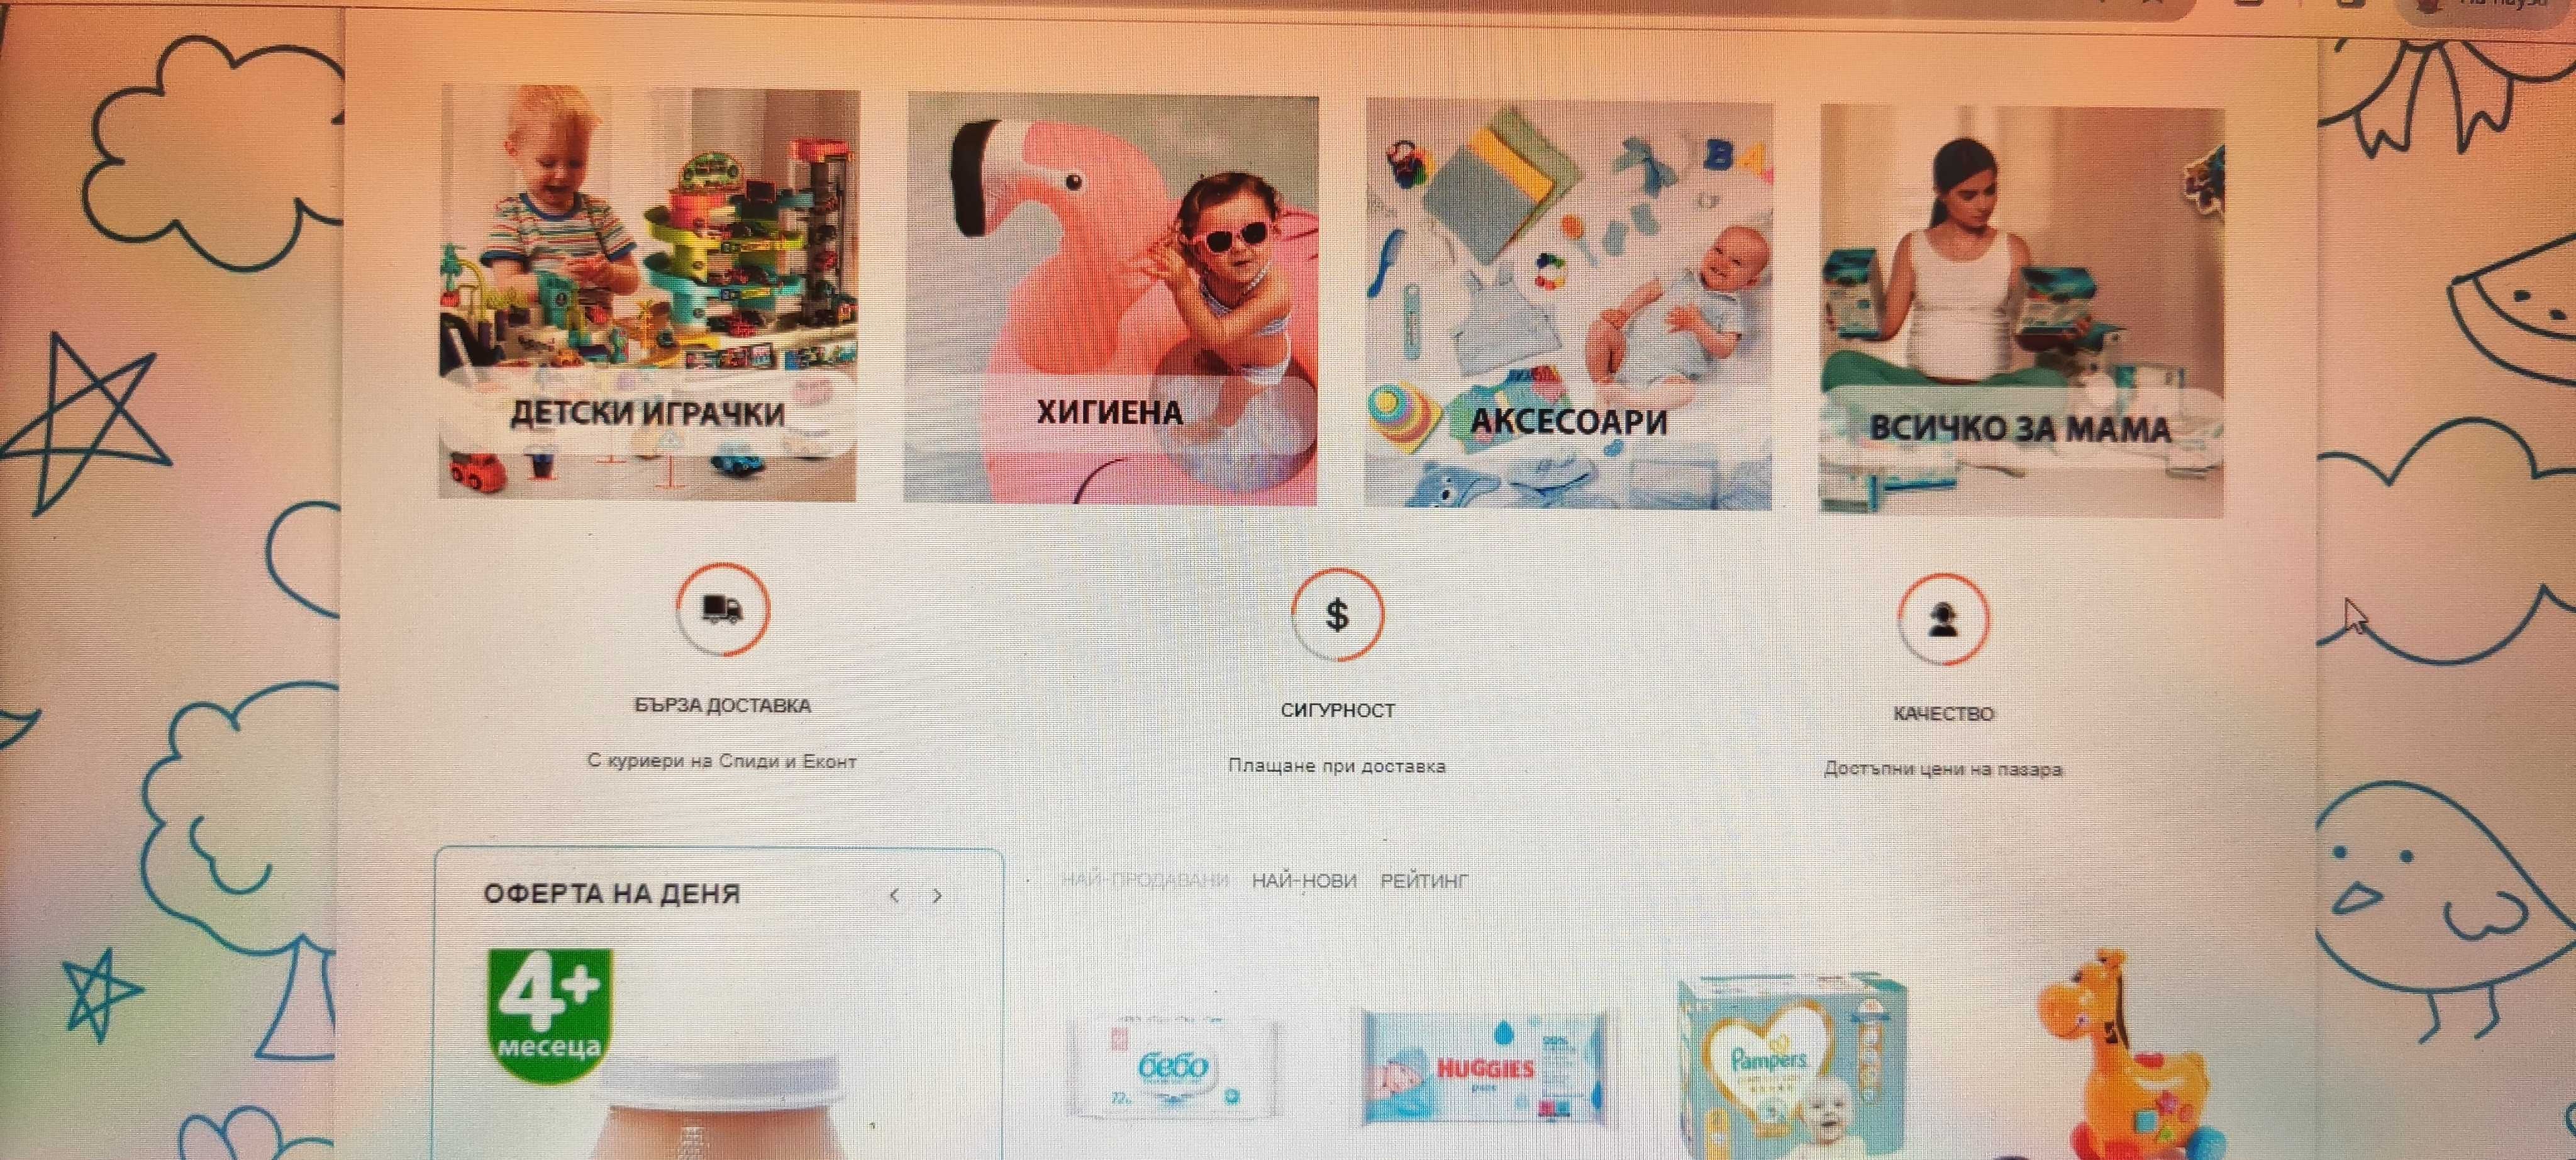 Продава се онлайн магазин за бебешки и детски стоки